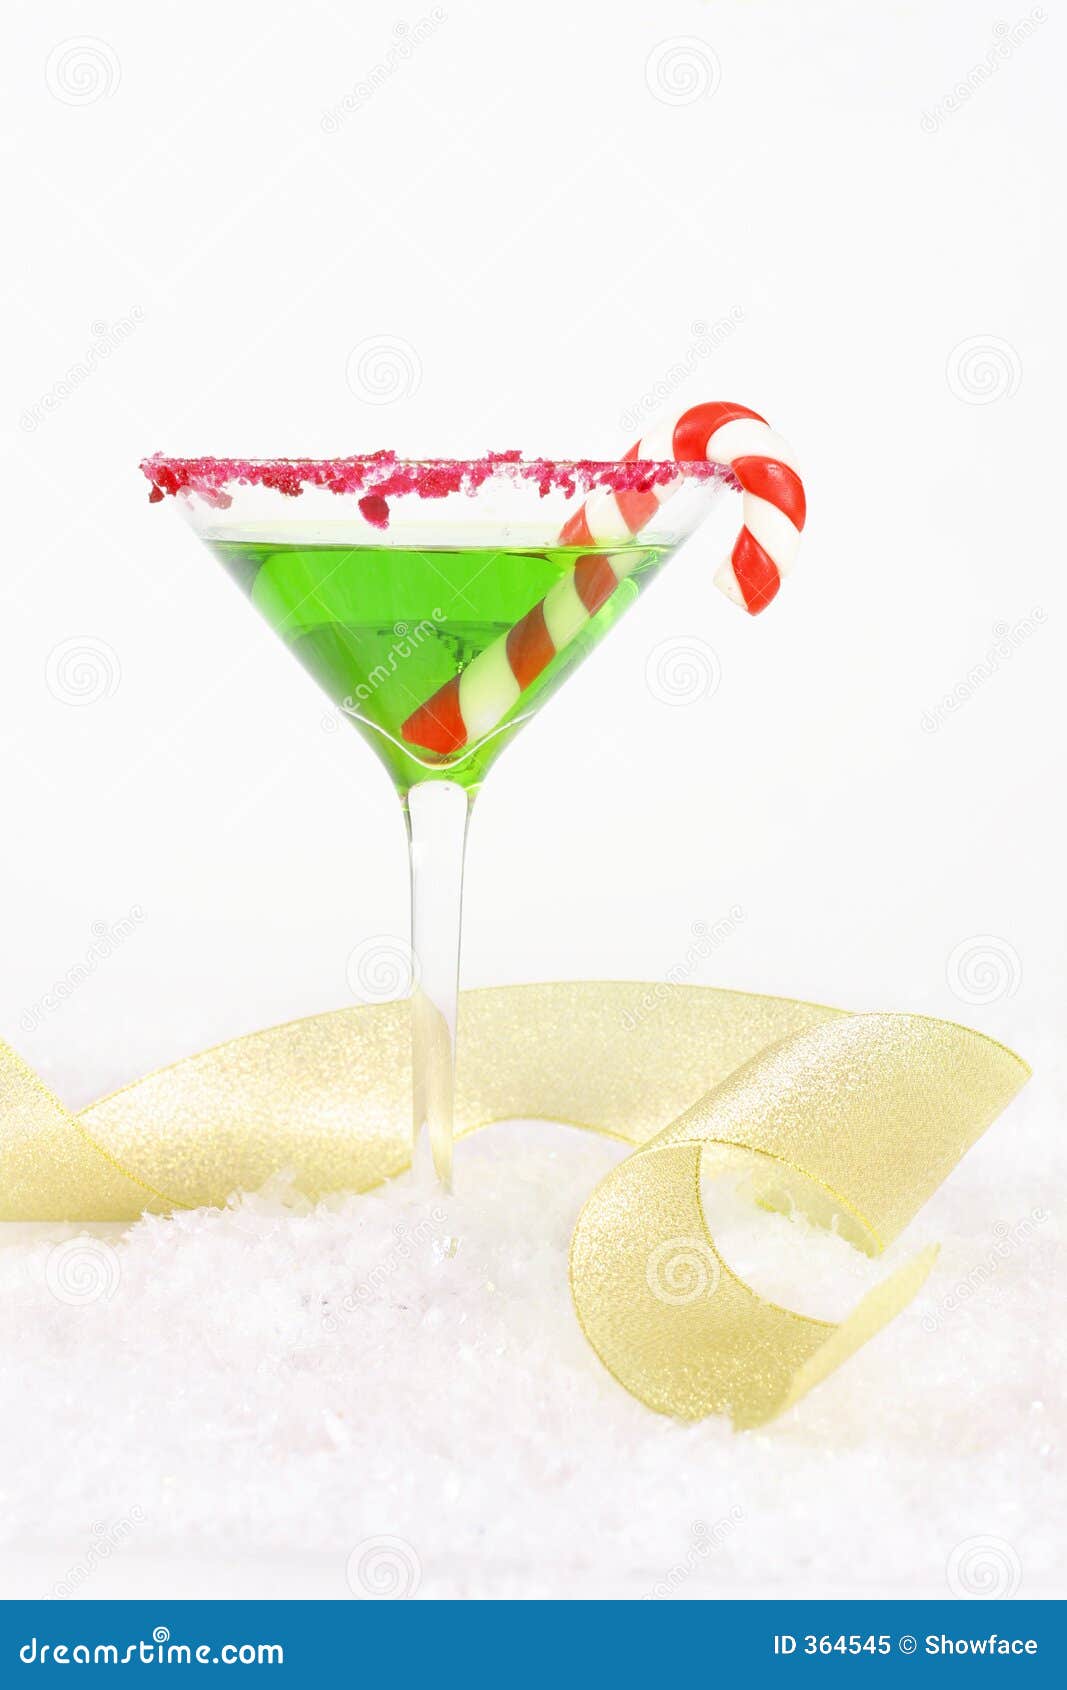 clipart christmas drinks - photo #37